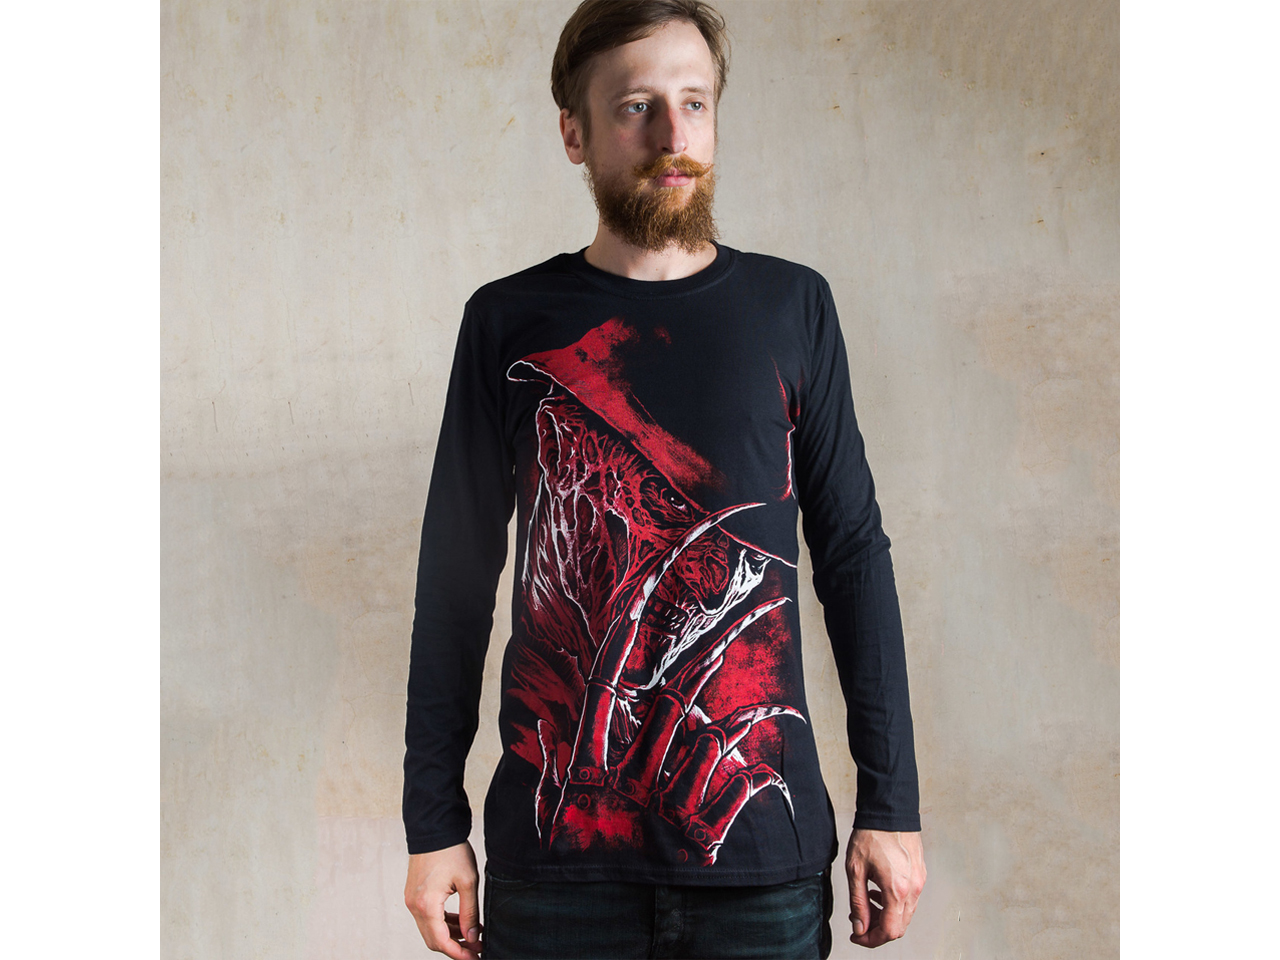 Freddy Krueger Long Sleeve Top T-Shirt Cult Horror Darkside Clothing Alternative